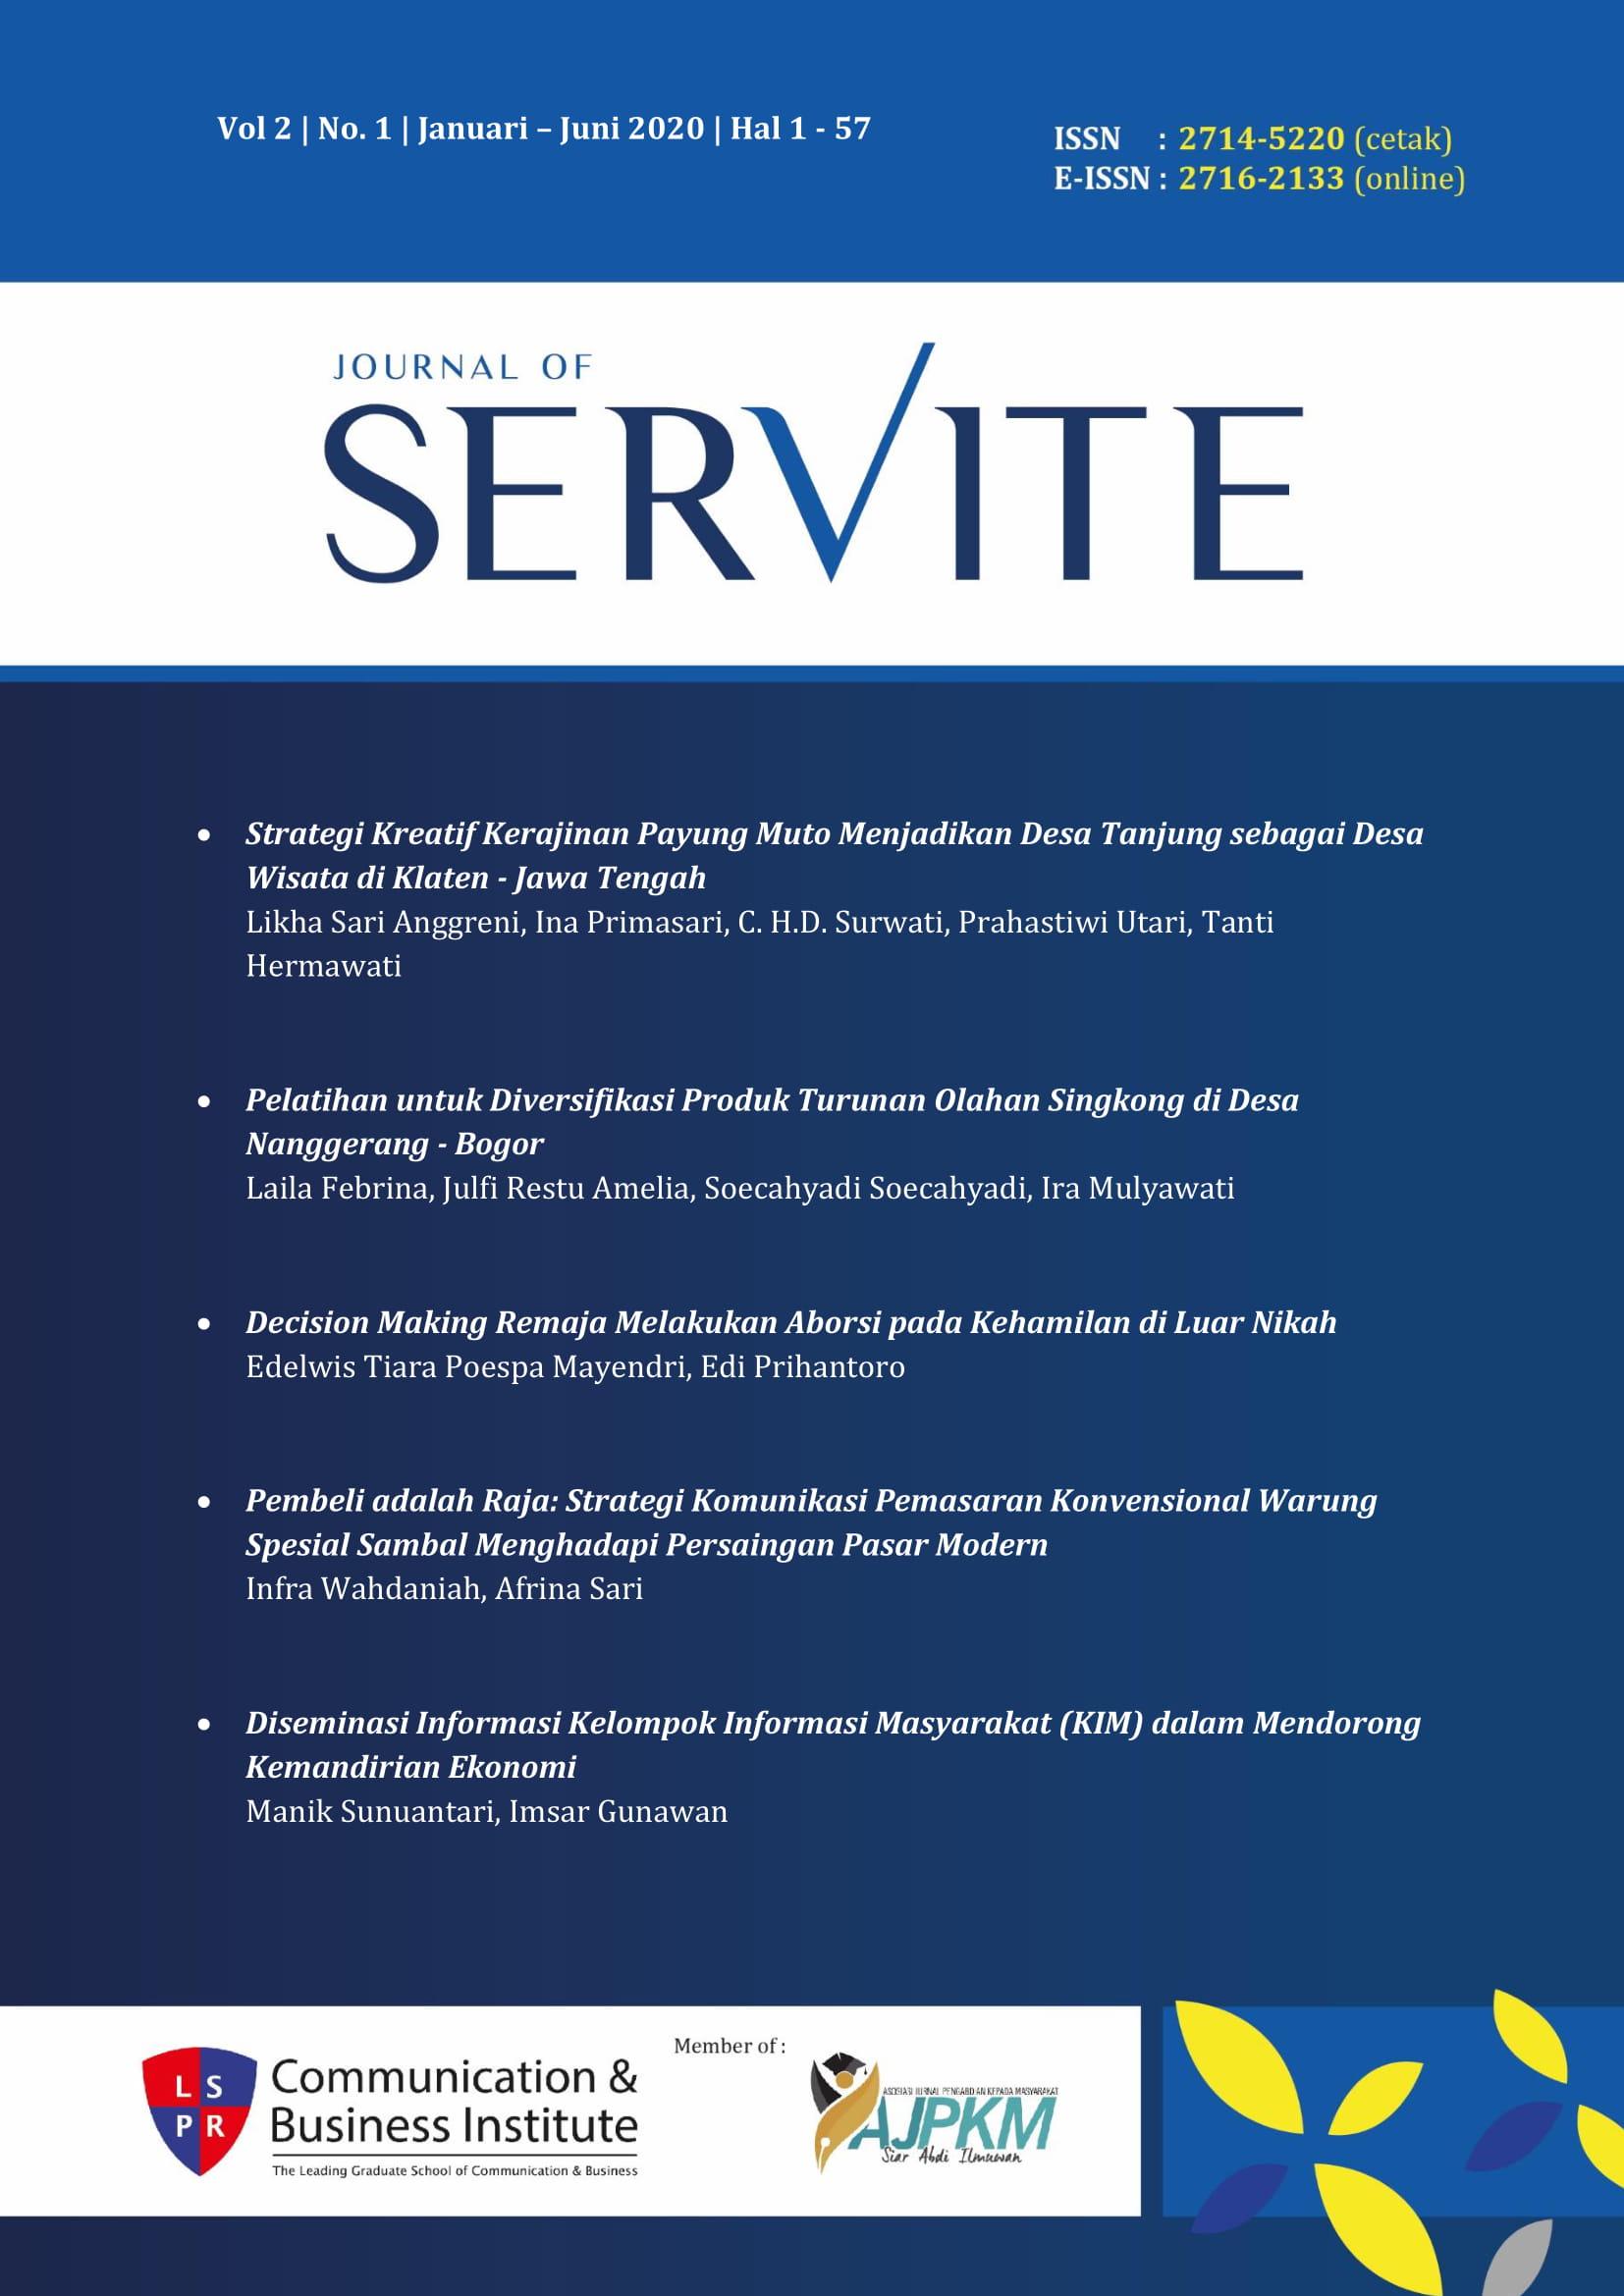 					View Vol. 2 No. 1 (2020): Journal of Servite
				